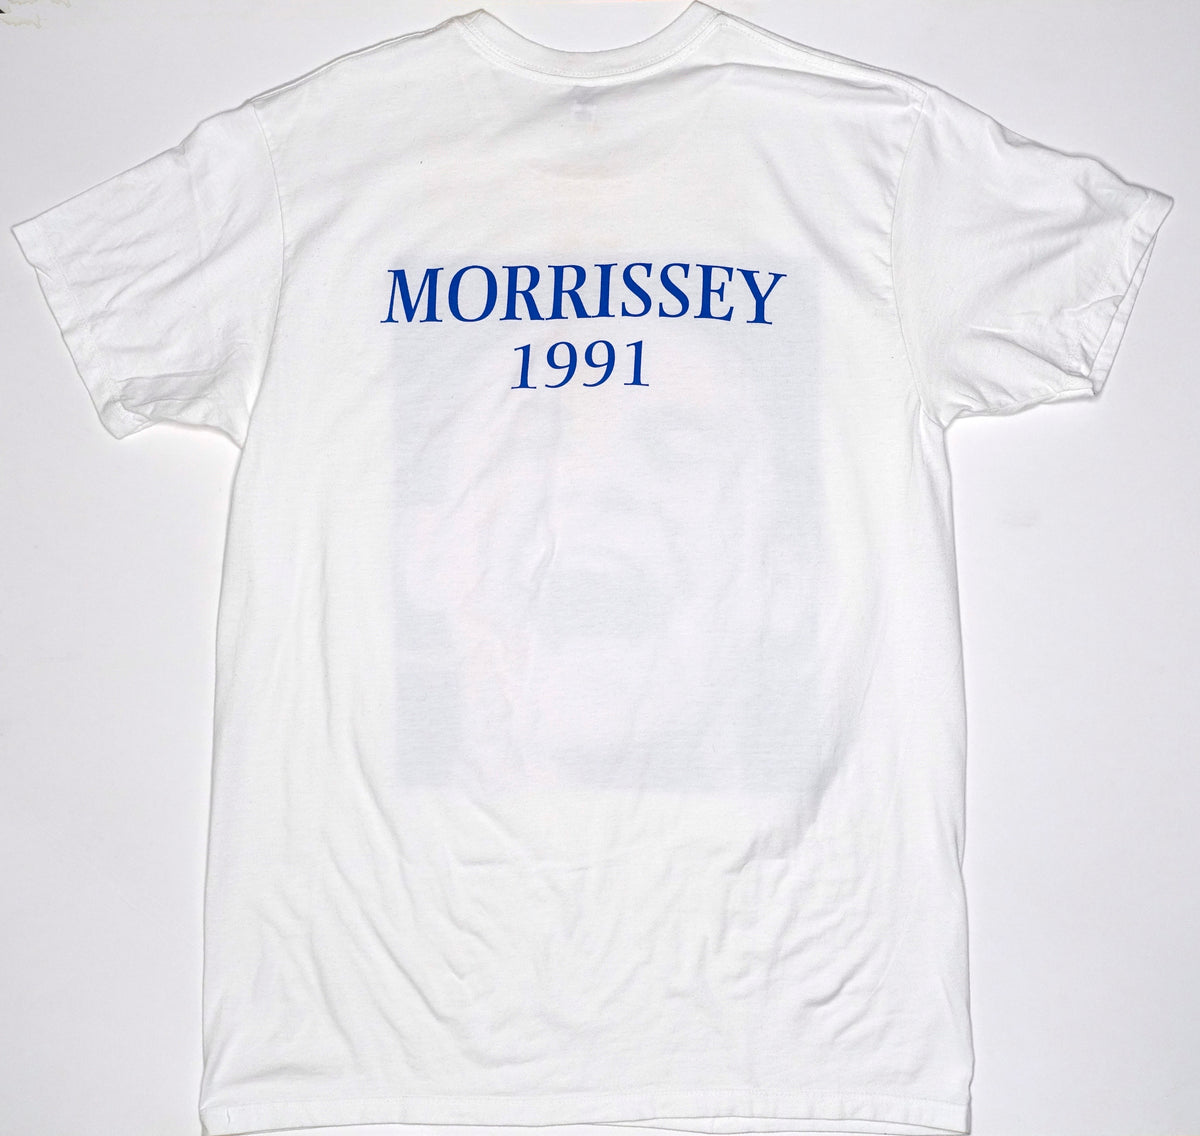 Morrissey - Kill Uncle Harvey Keitel Shirt Size Large (Homemade